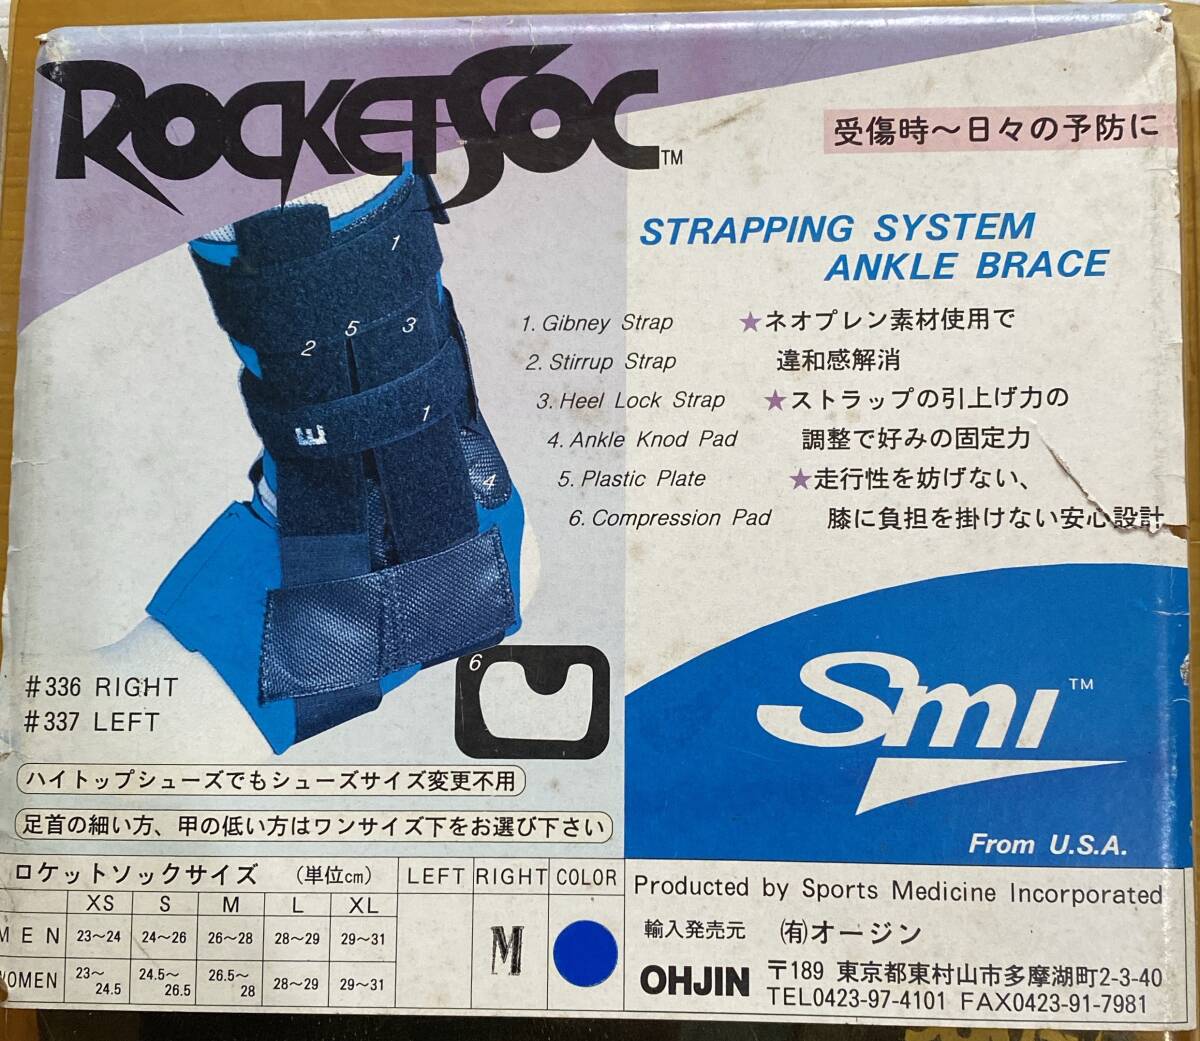  Rocket sok опора правый для внутри .... предотвращение SMI производства M(26-28cm) размер темно-синий цвет / не использовался товар 